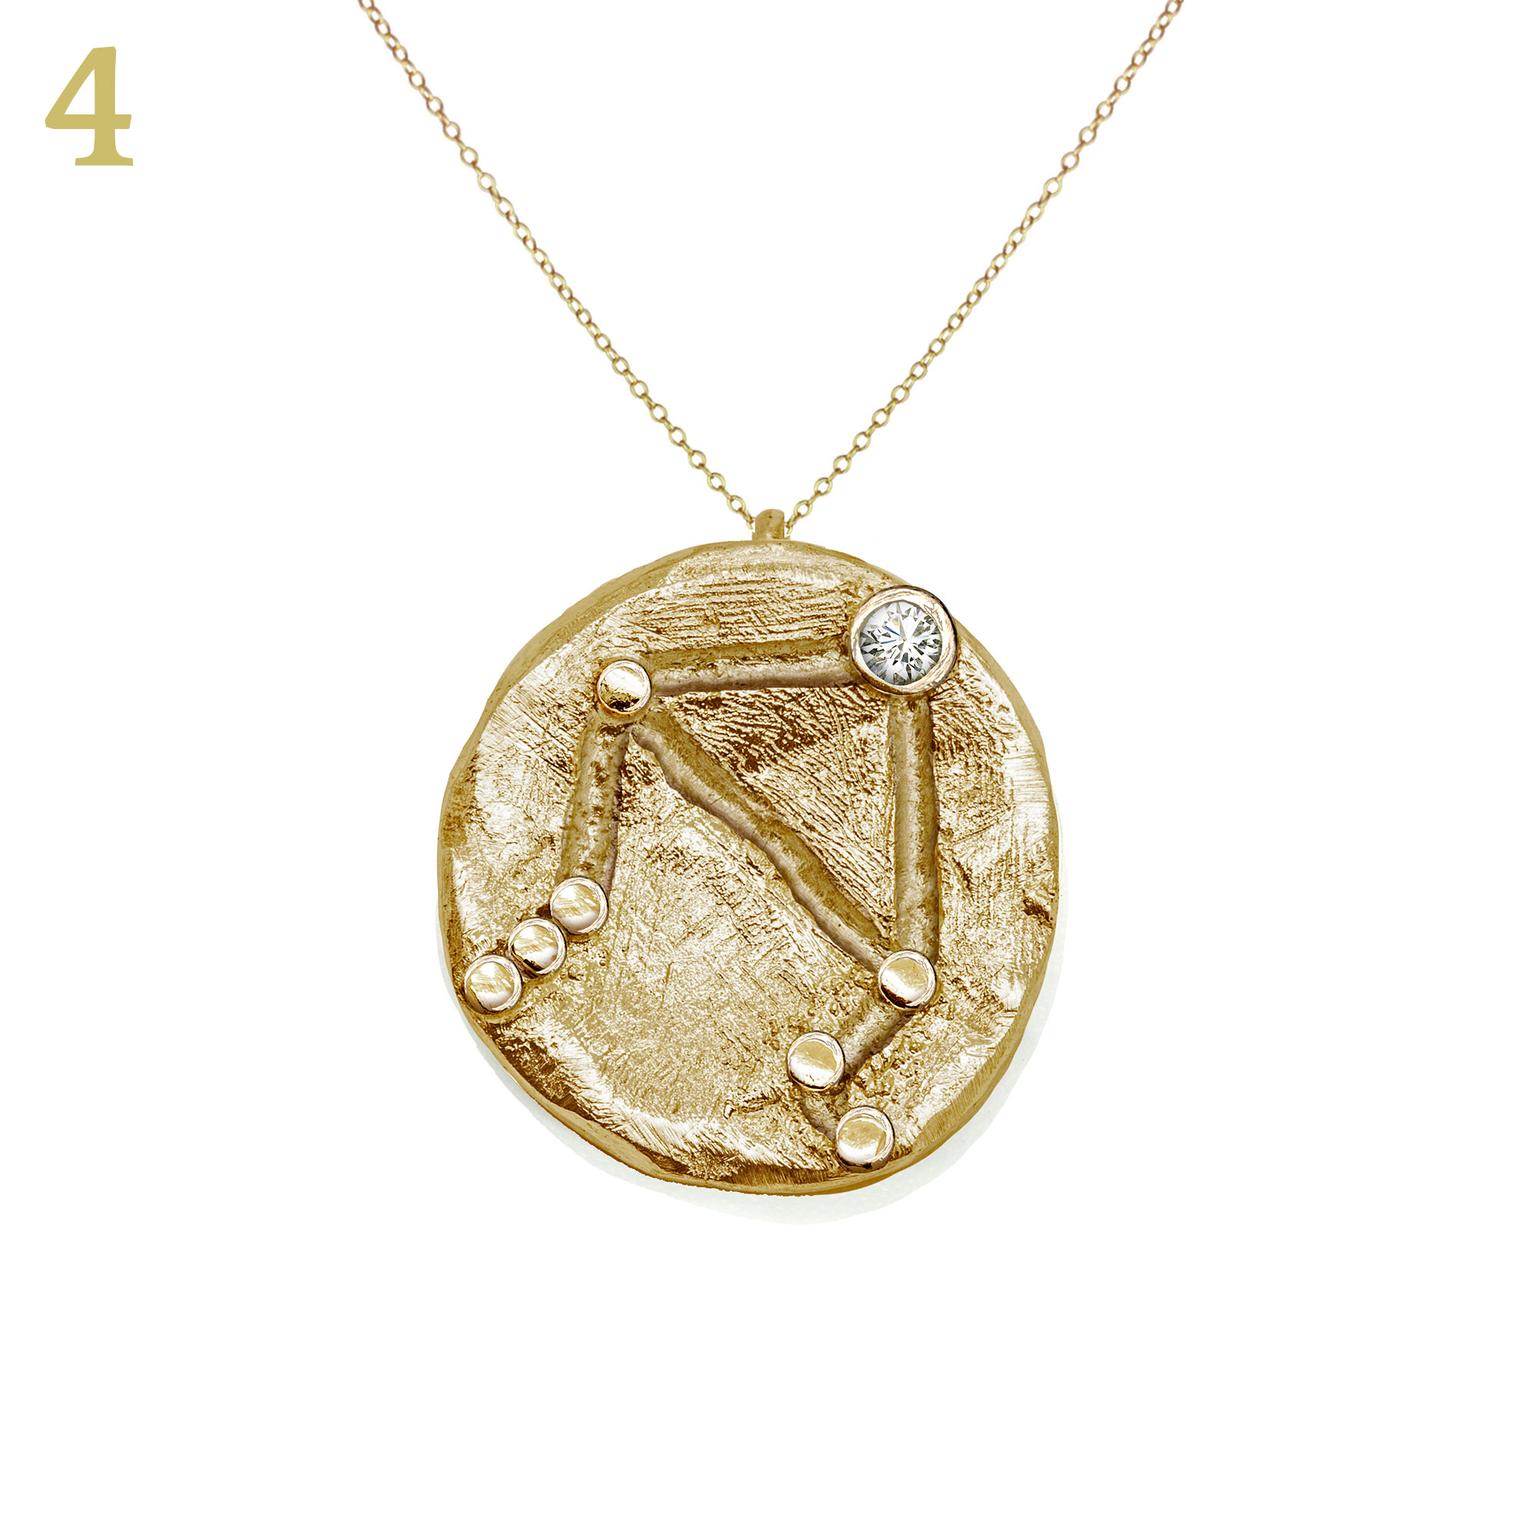 Anna Loucah Fairtrade gold and diamond amulet necklace